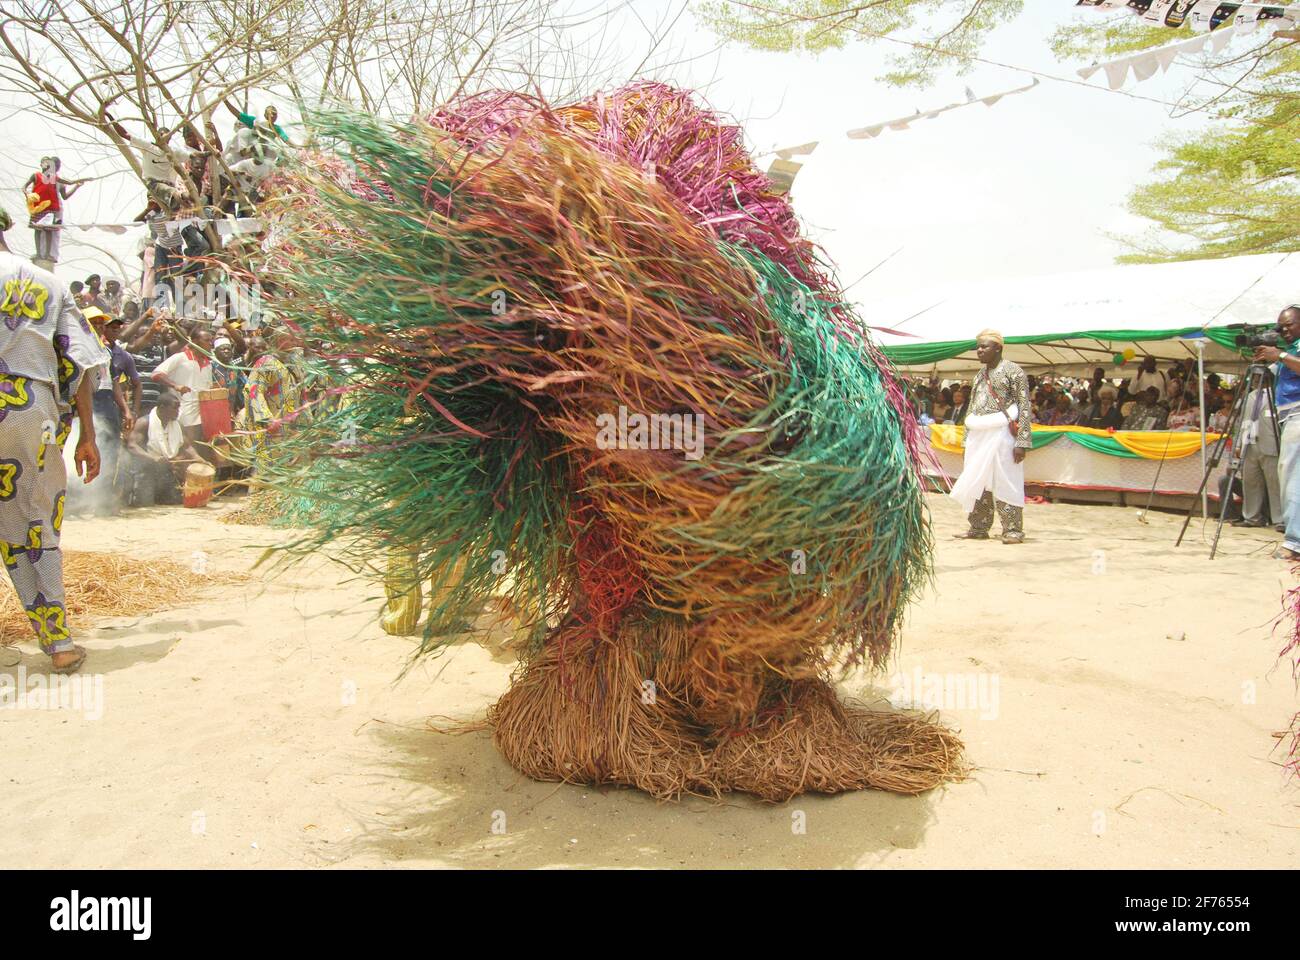 Zangbeto Masquerade dancing at the Annual Black Heritage Festival in Badagry, Lagos Nigeria. Stock Photo